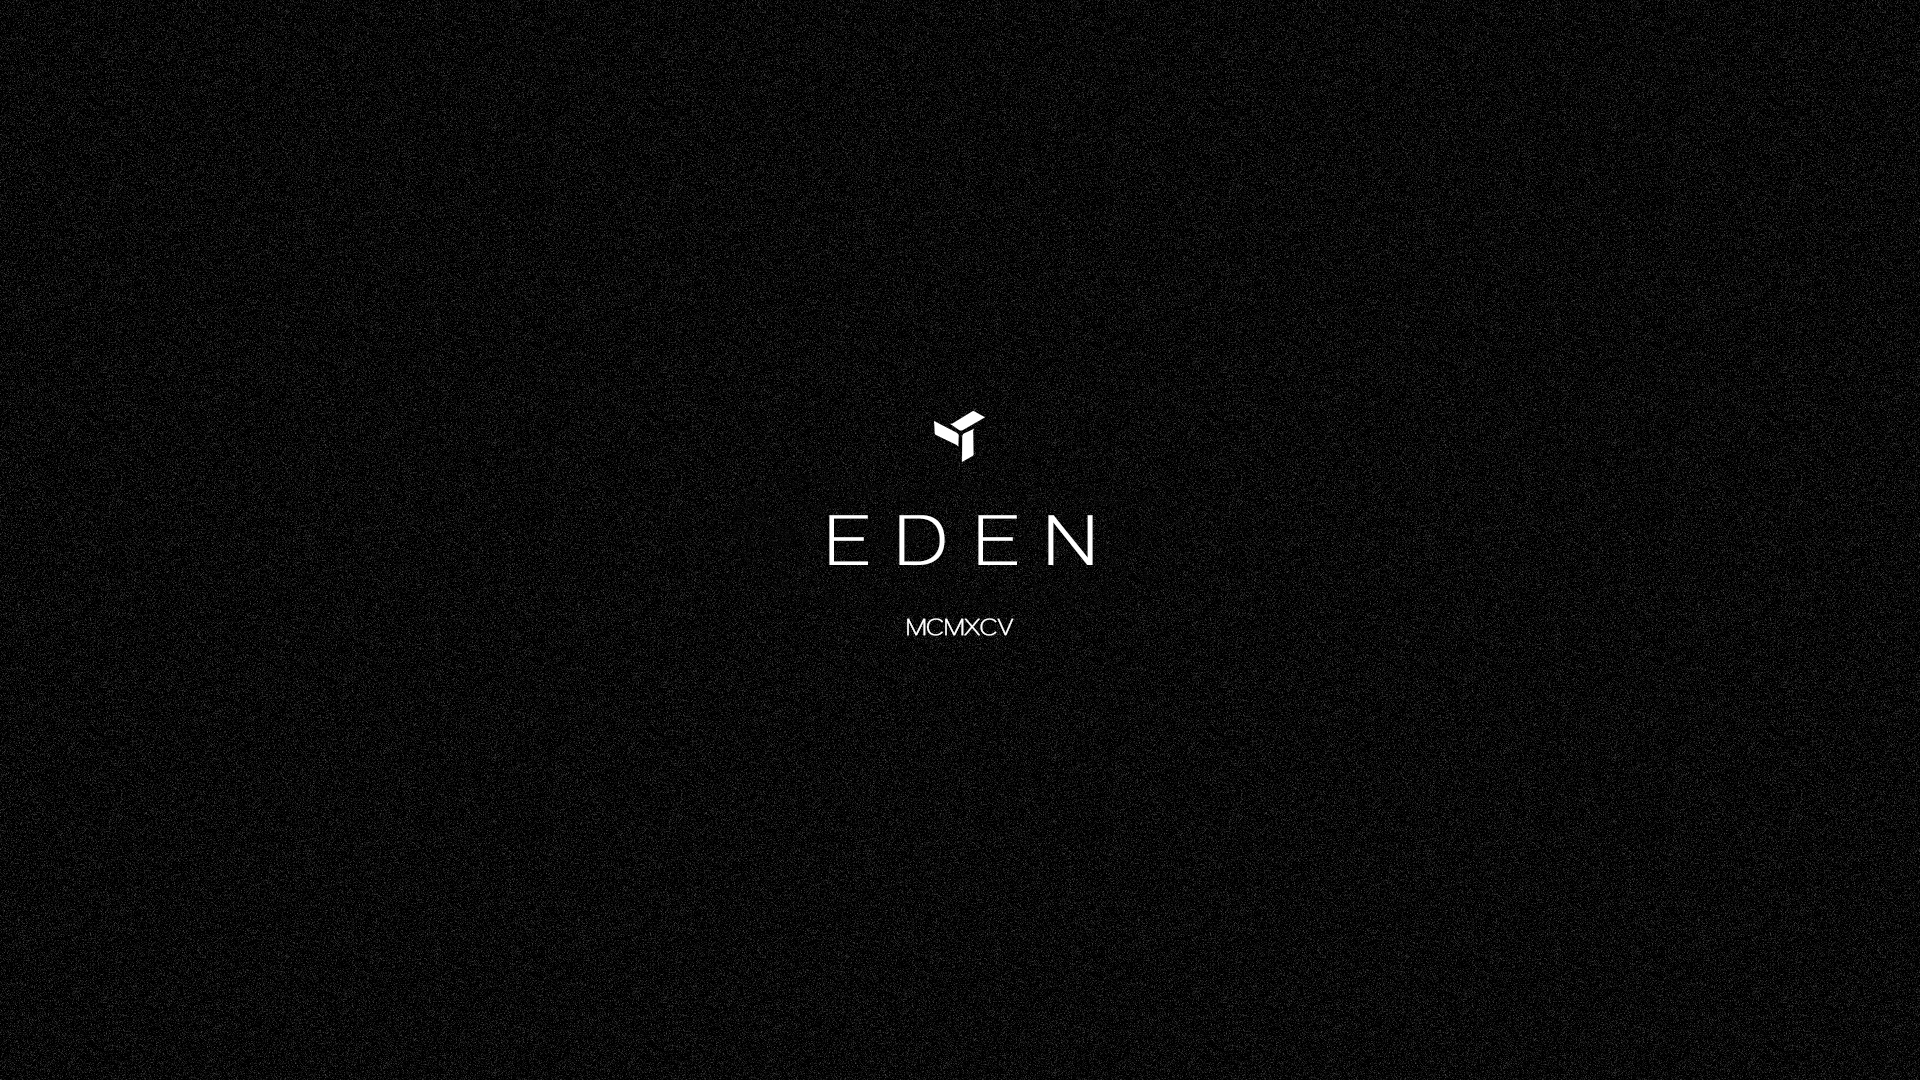 Some simplistic EDEN wallpaper, created by me.: eden